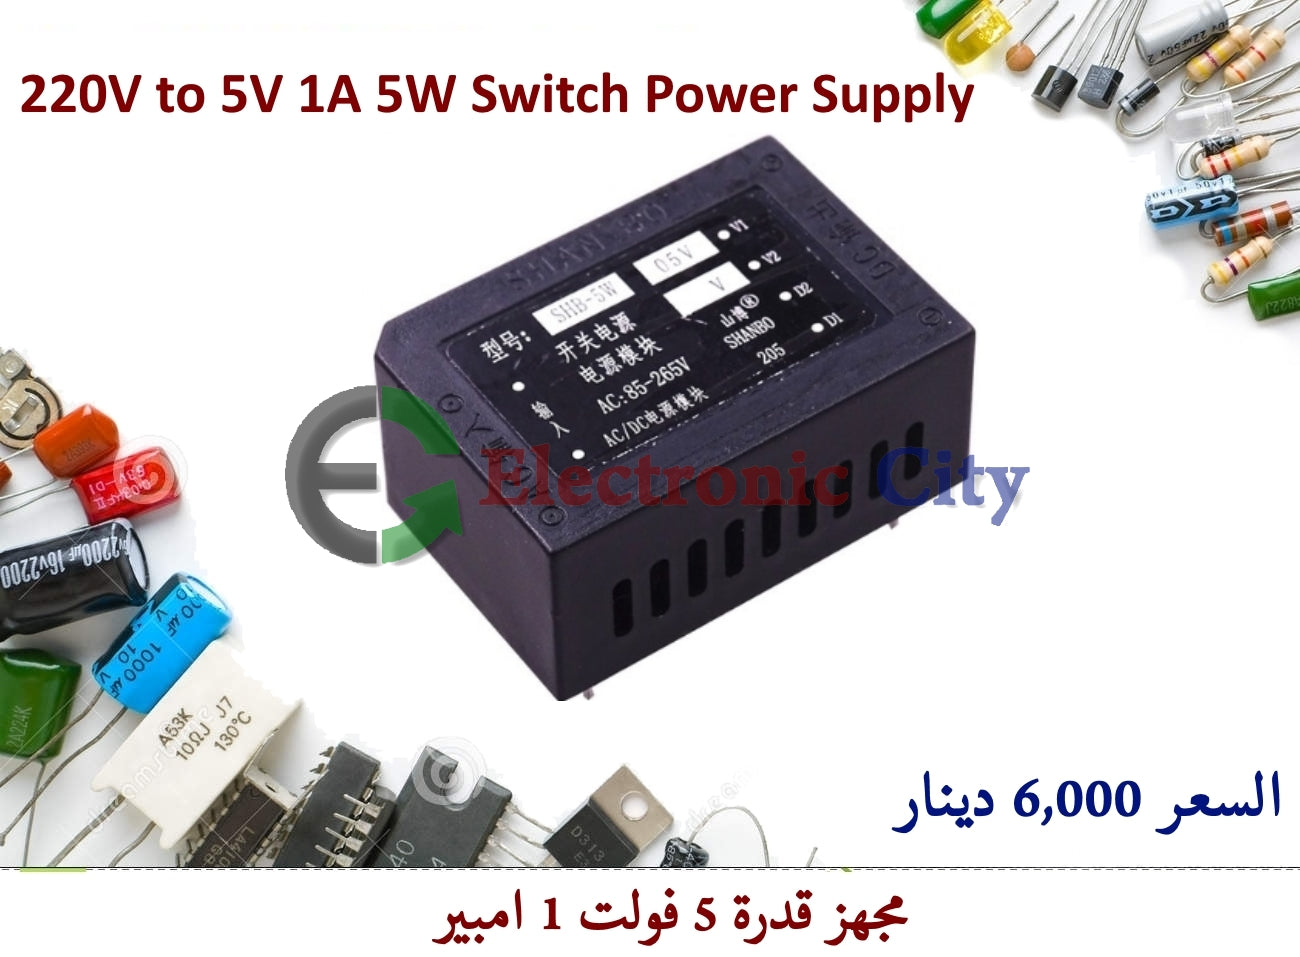 Power Supply 220v to 5V 1A